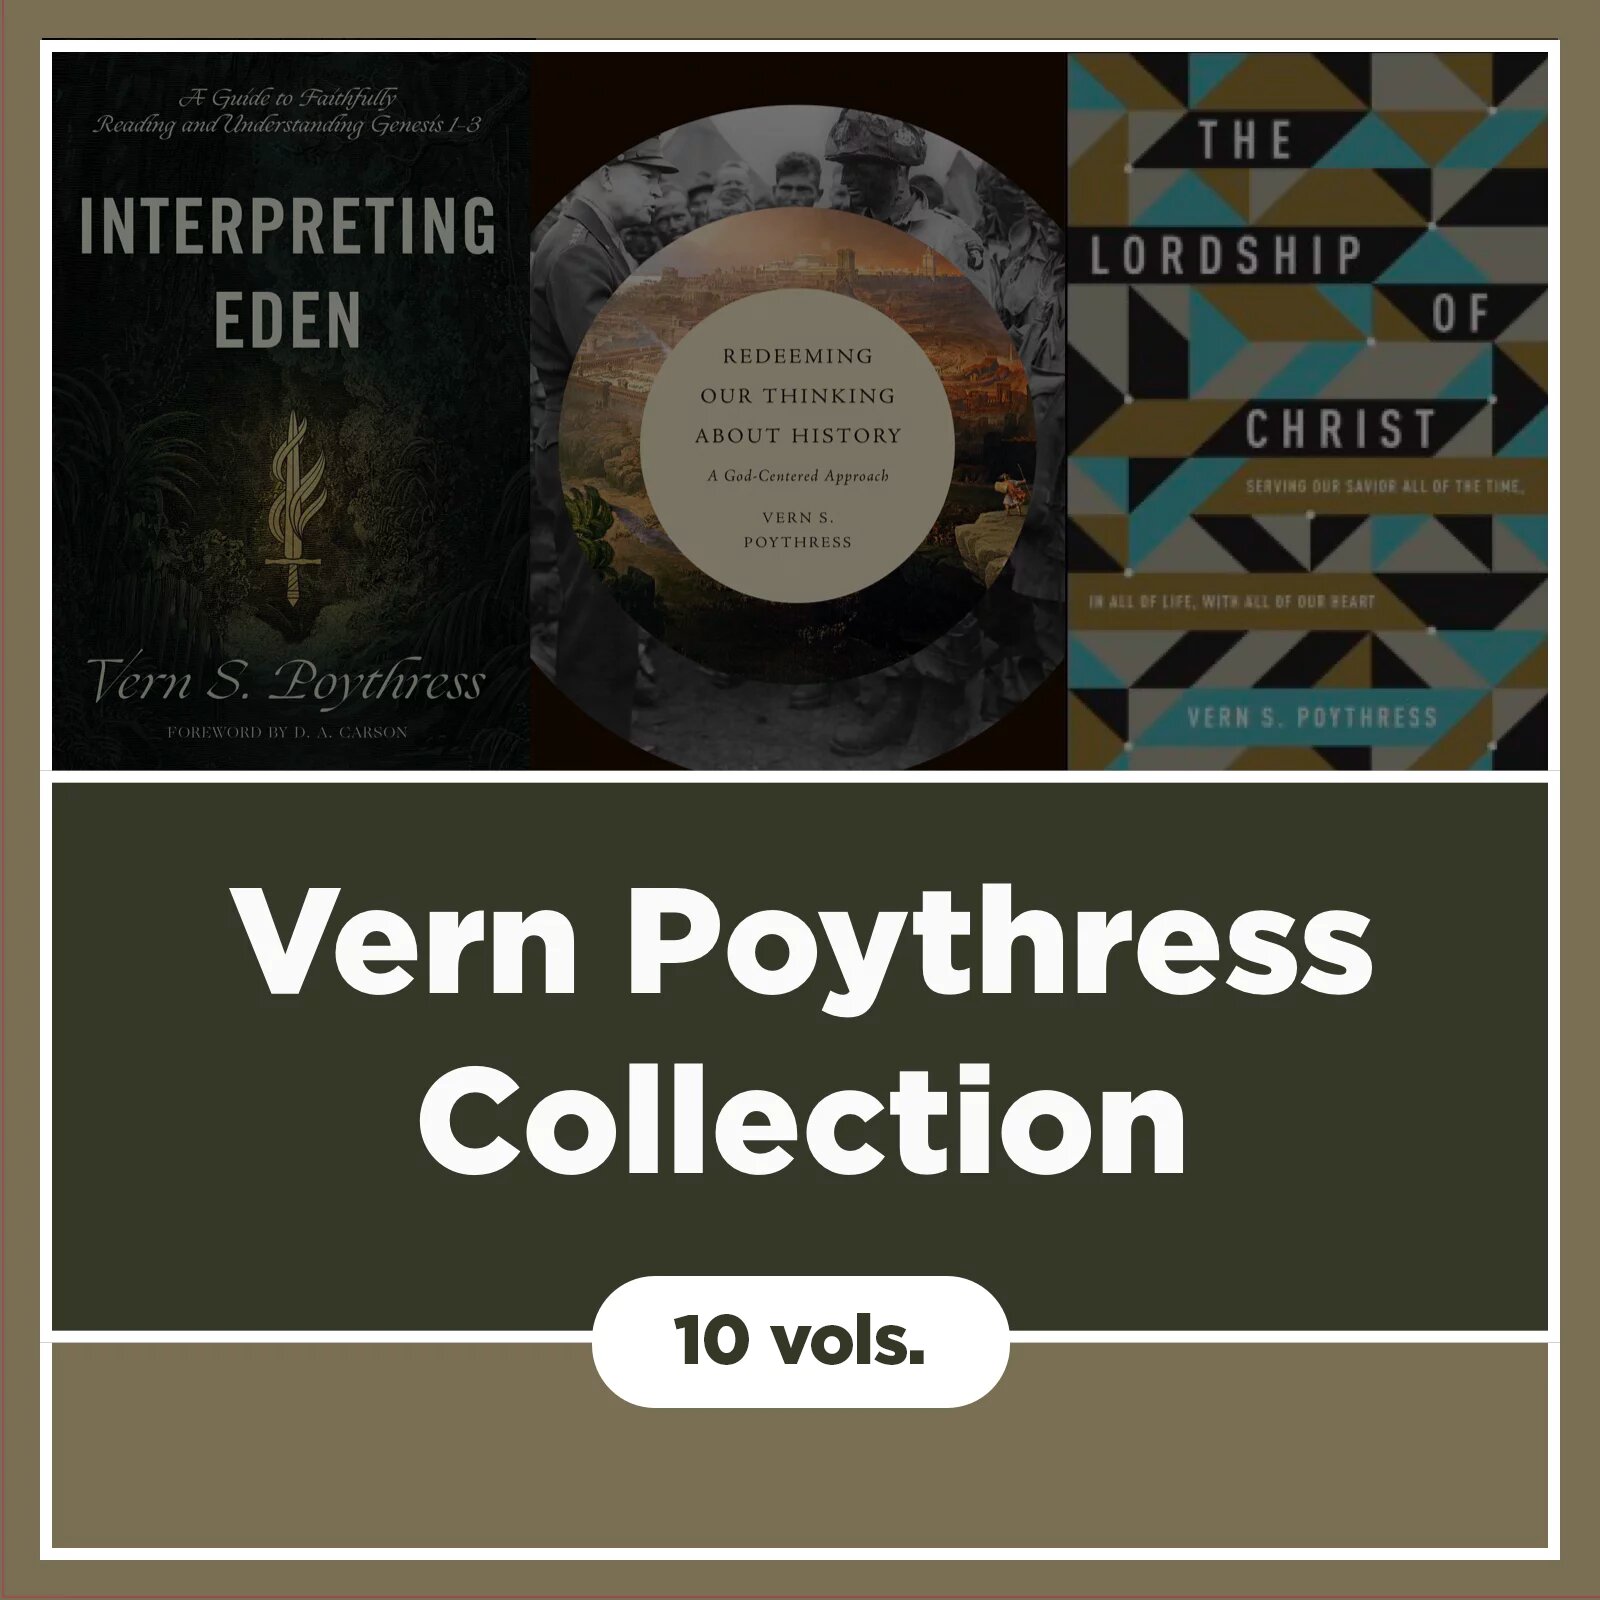 Vern Poythress Collection (10 vols.)